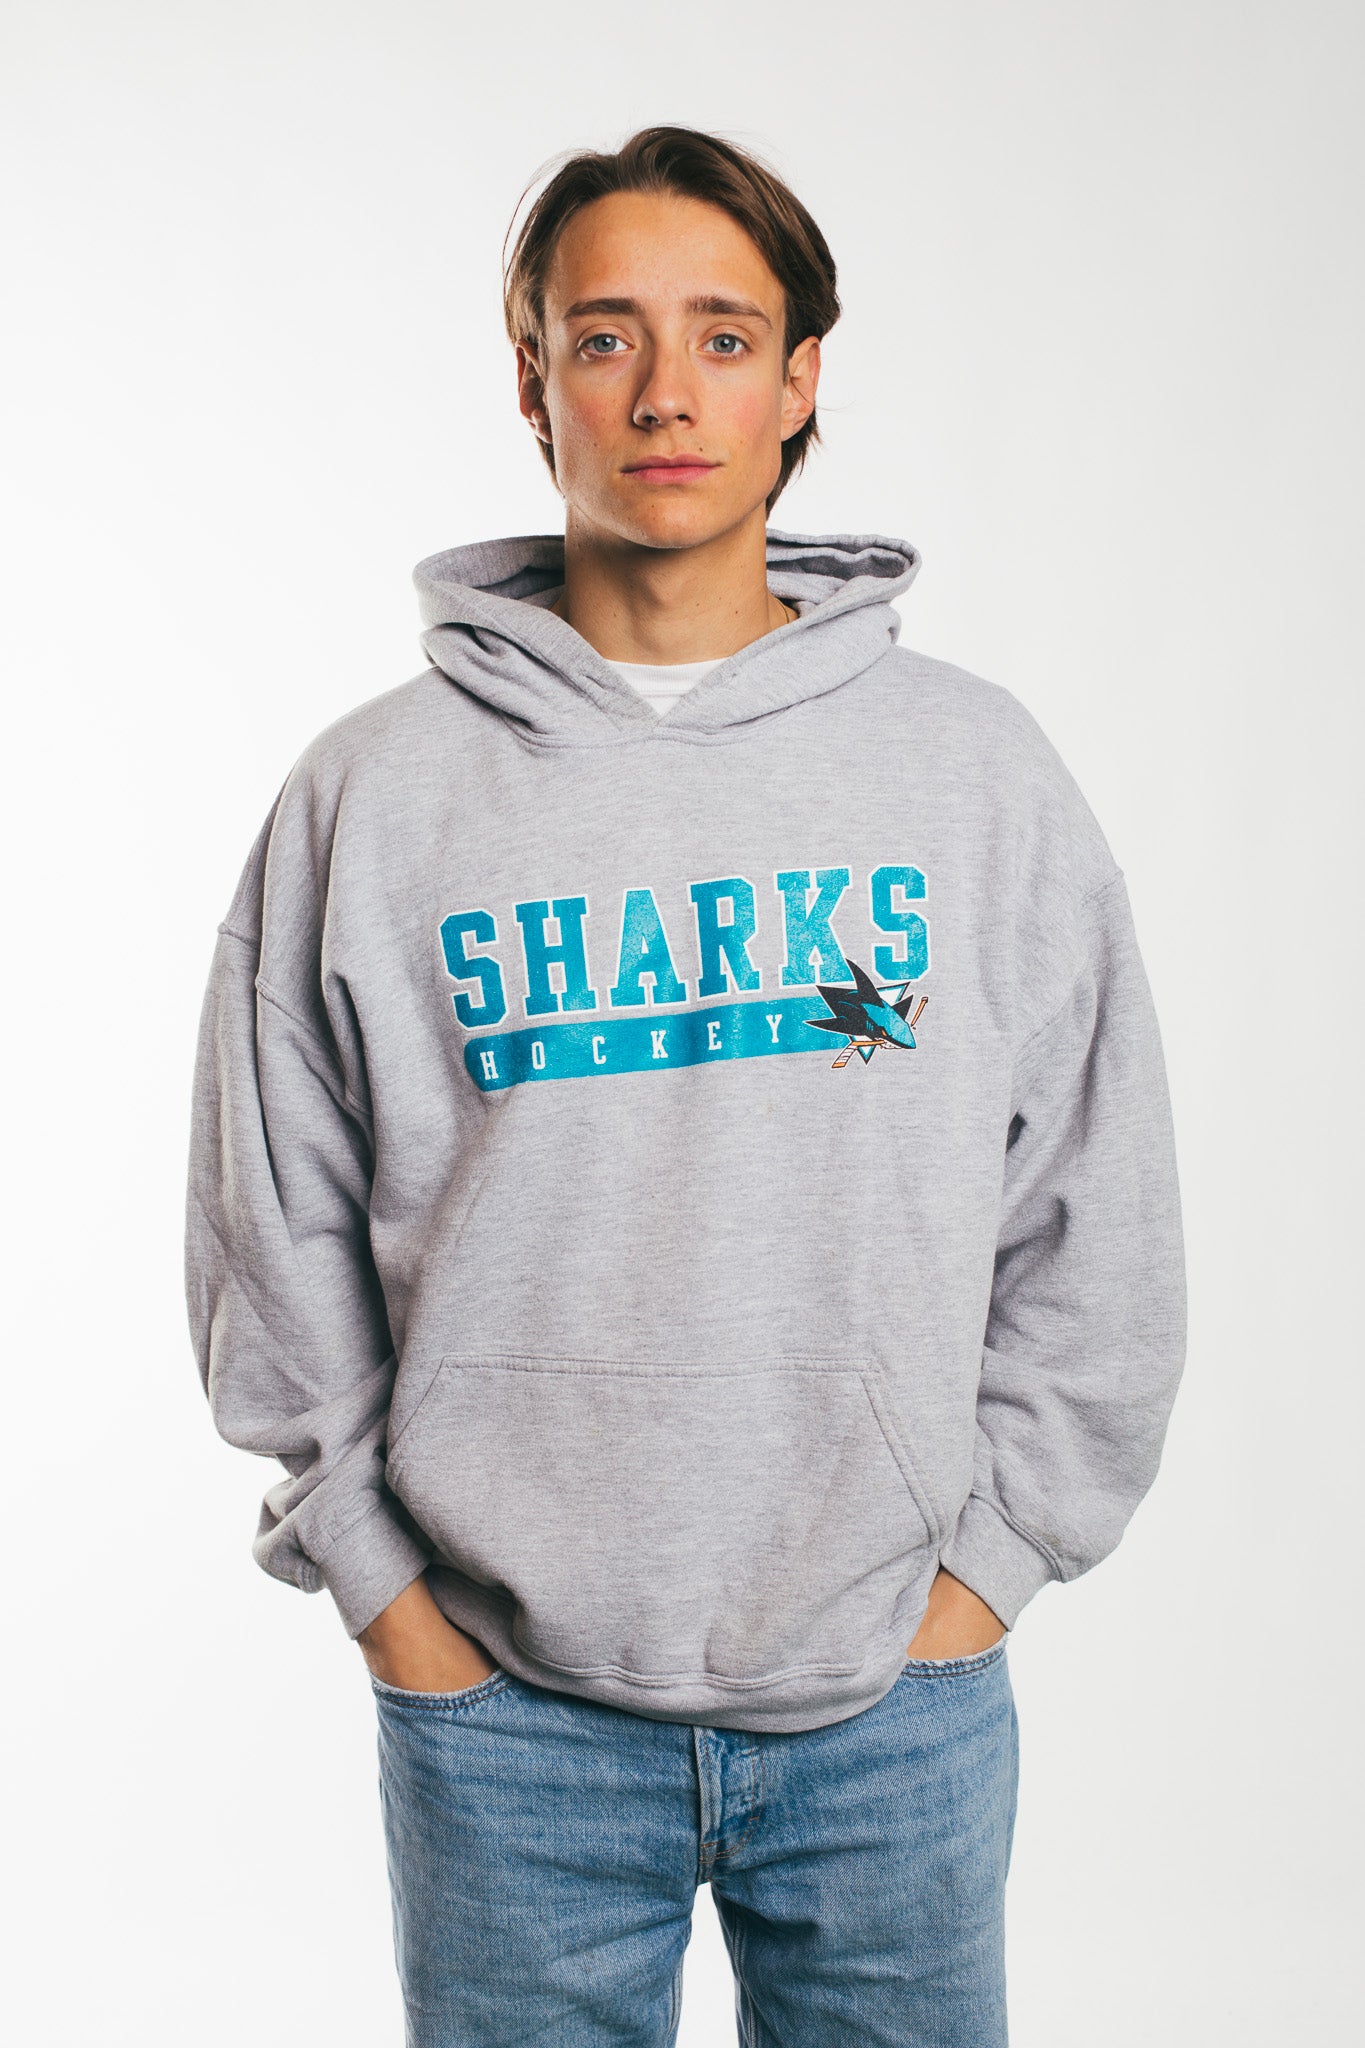 Sharks Hockey - Hoodie (L)